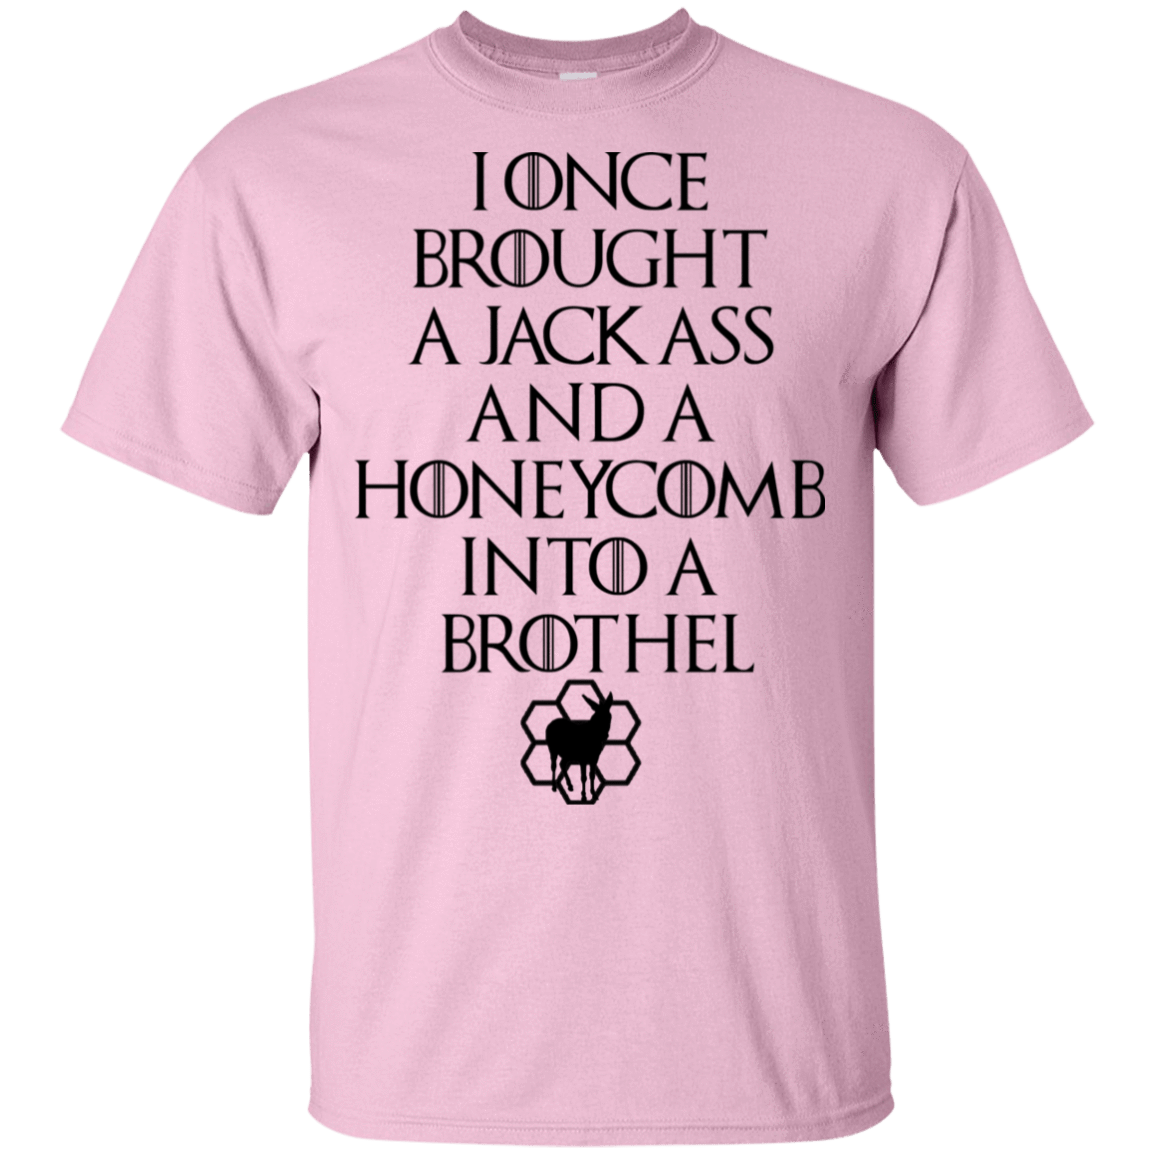 T-Shirts Light Pink / S Jackass and the Honeycomb T-Shirt